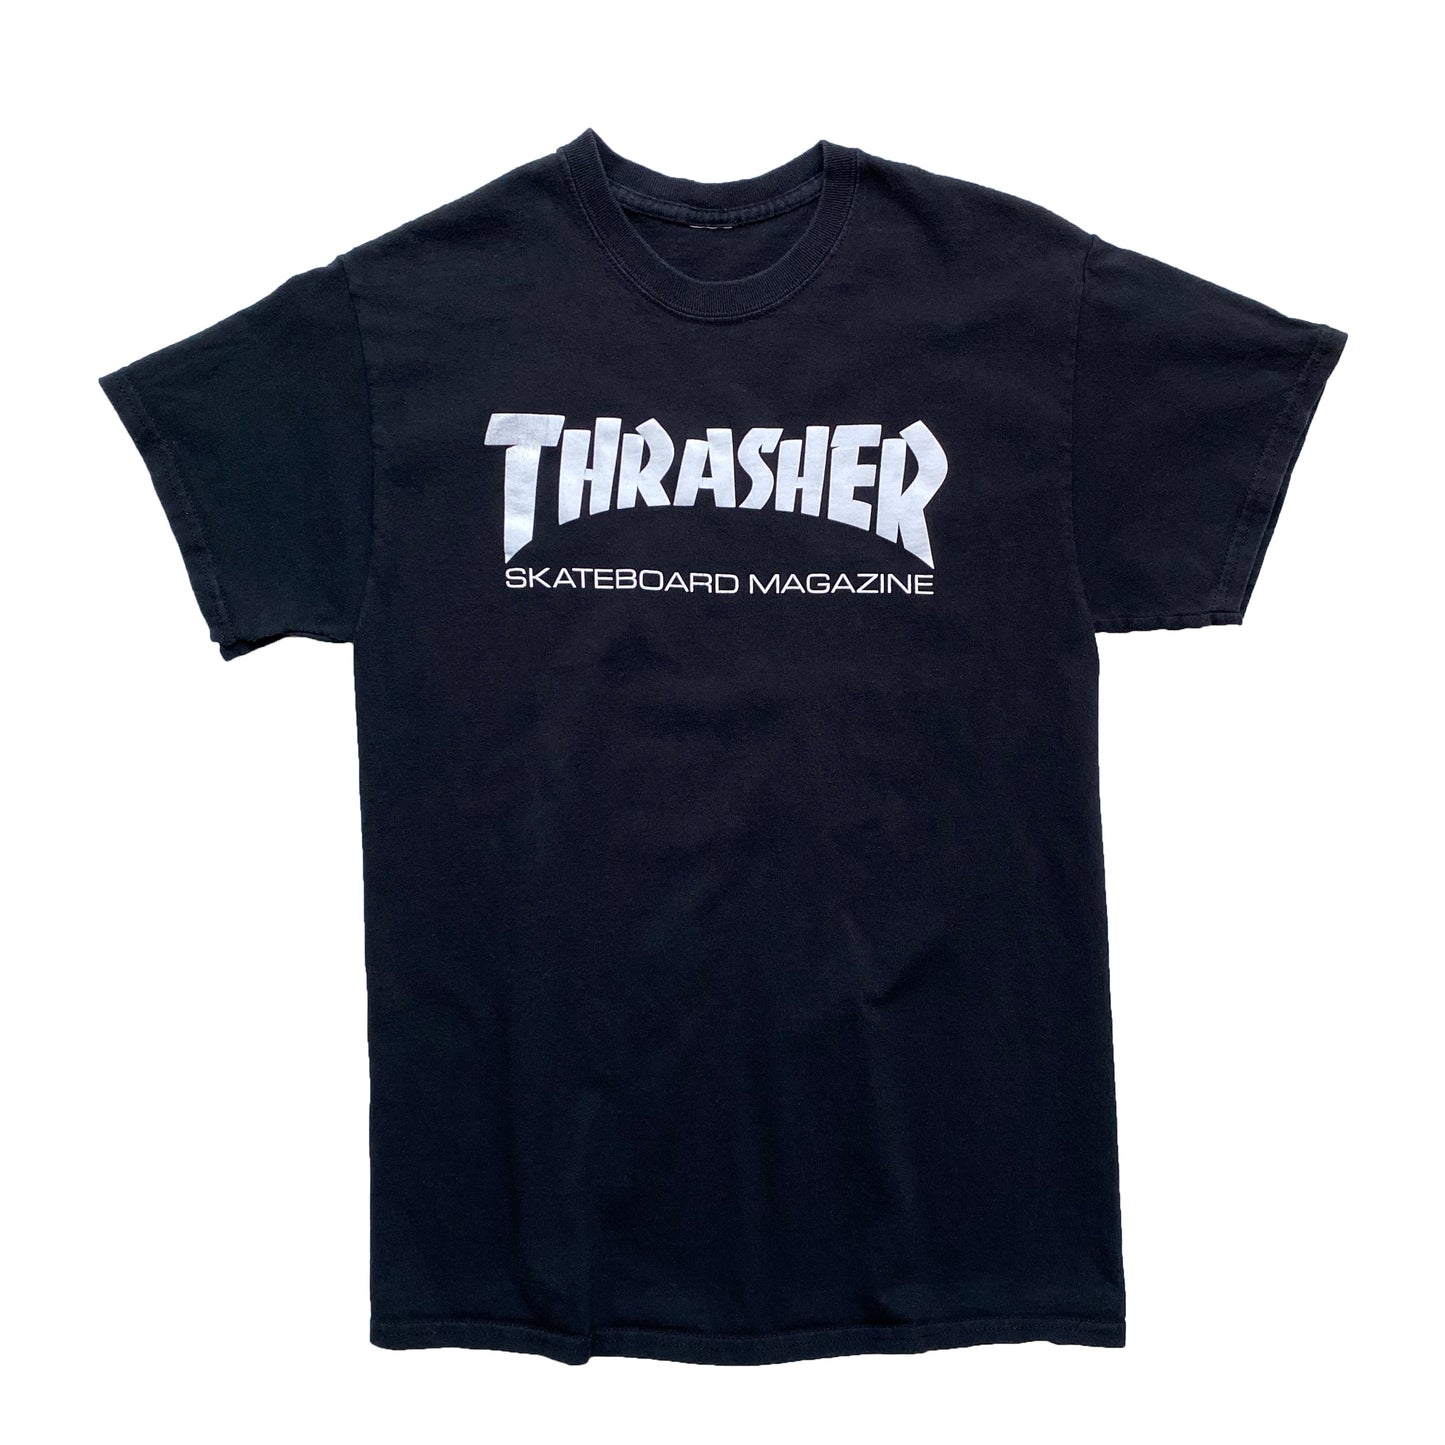 00's THRASHER T-SHIRT